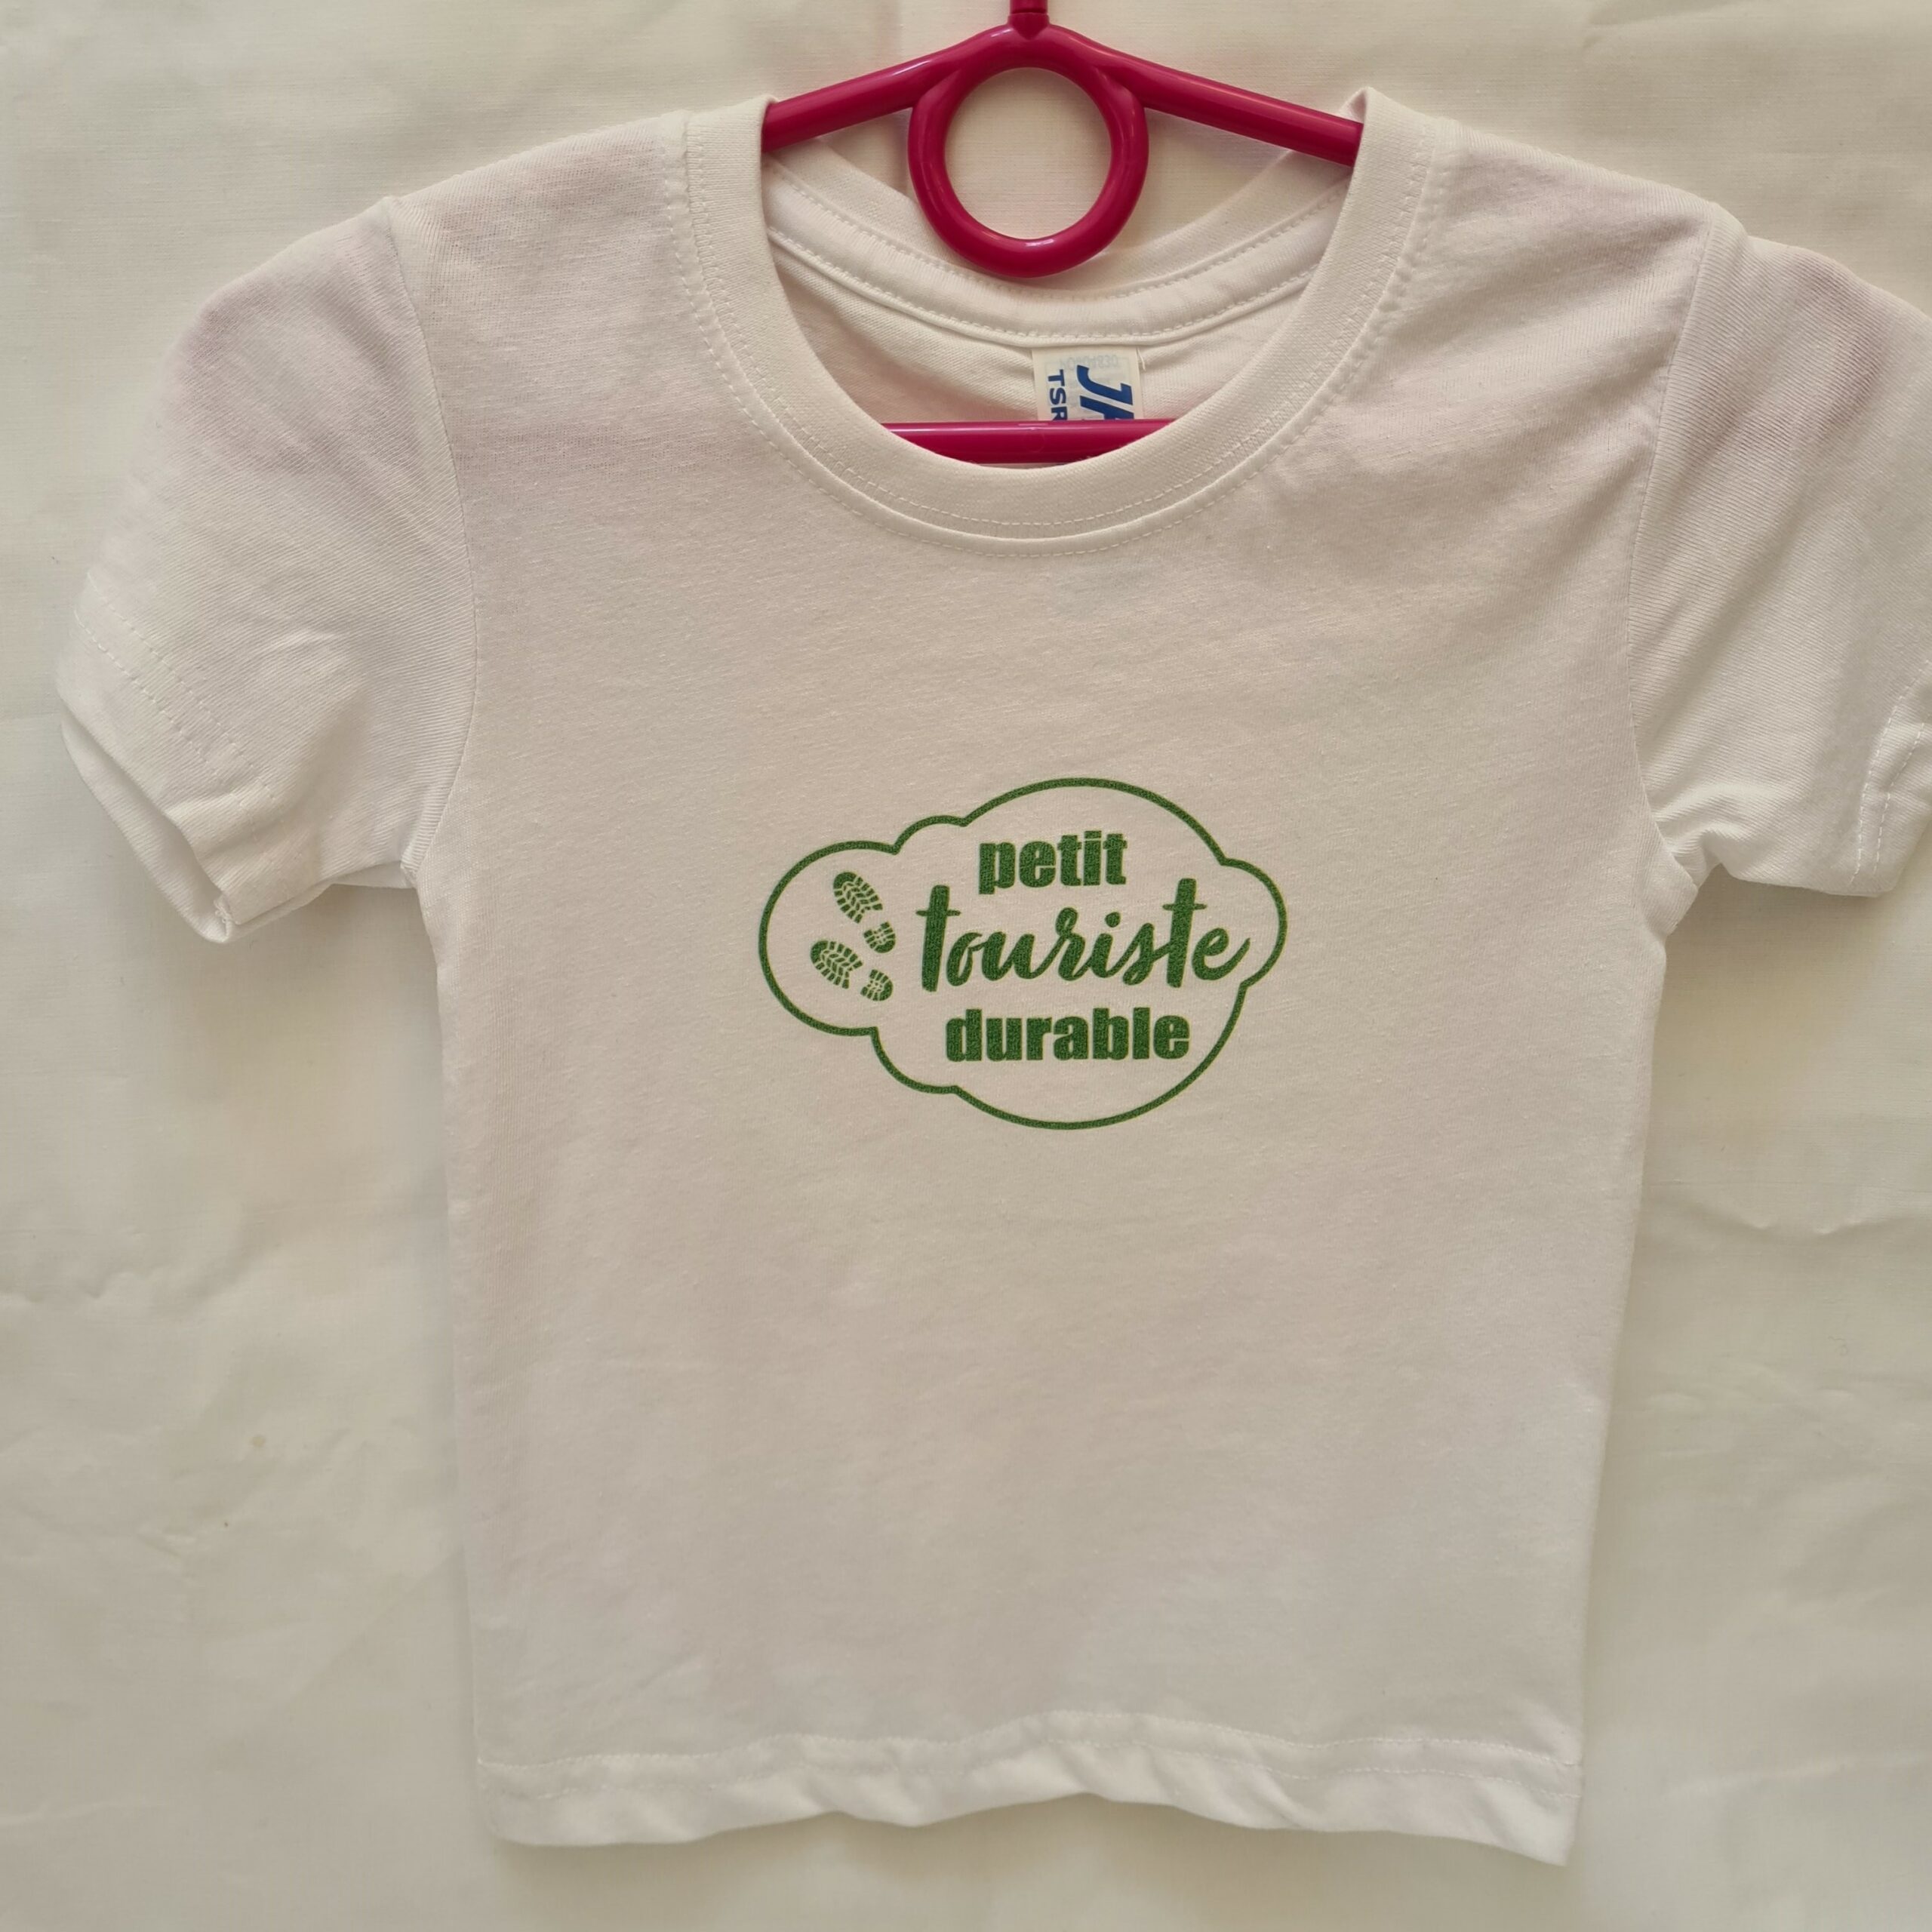 Tee-shirt enfant “Petit touriste durable” blanc – 1 an